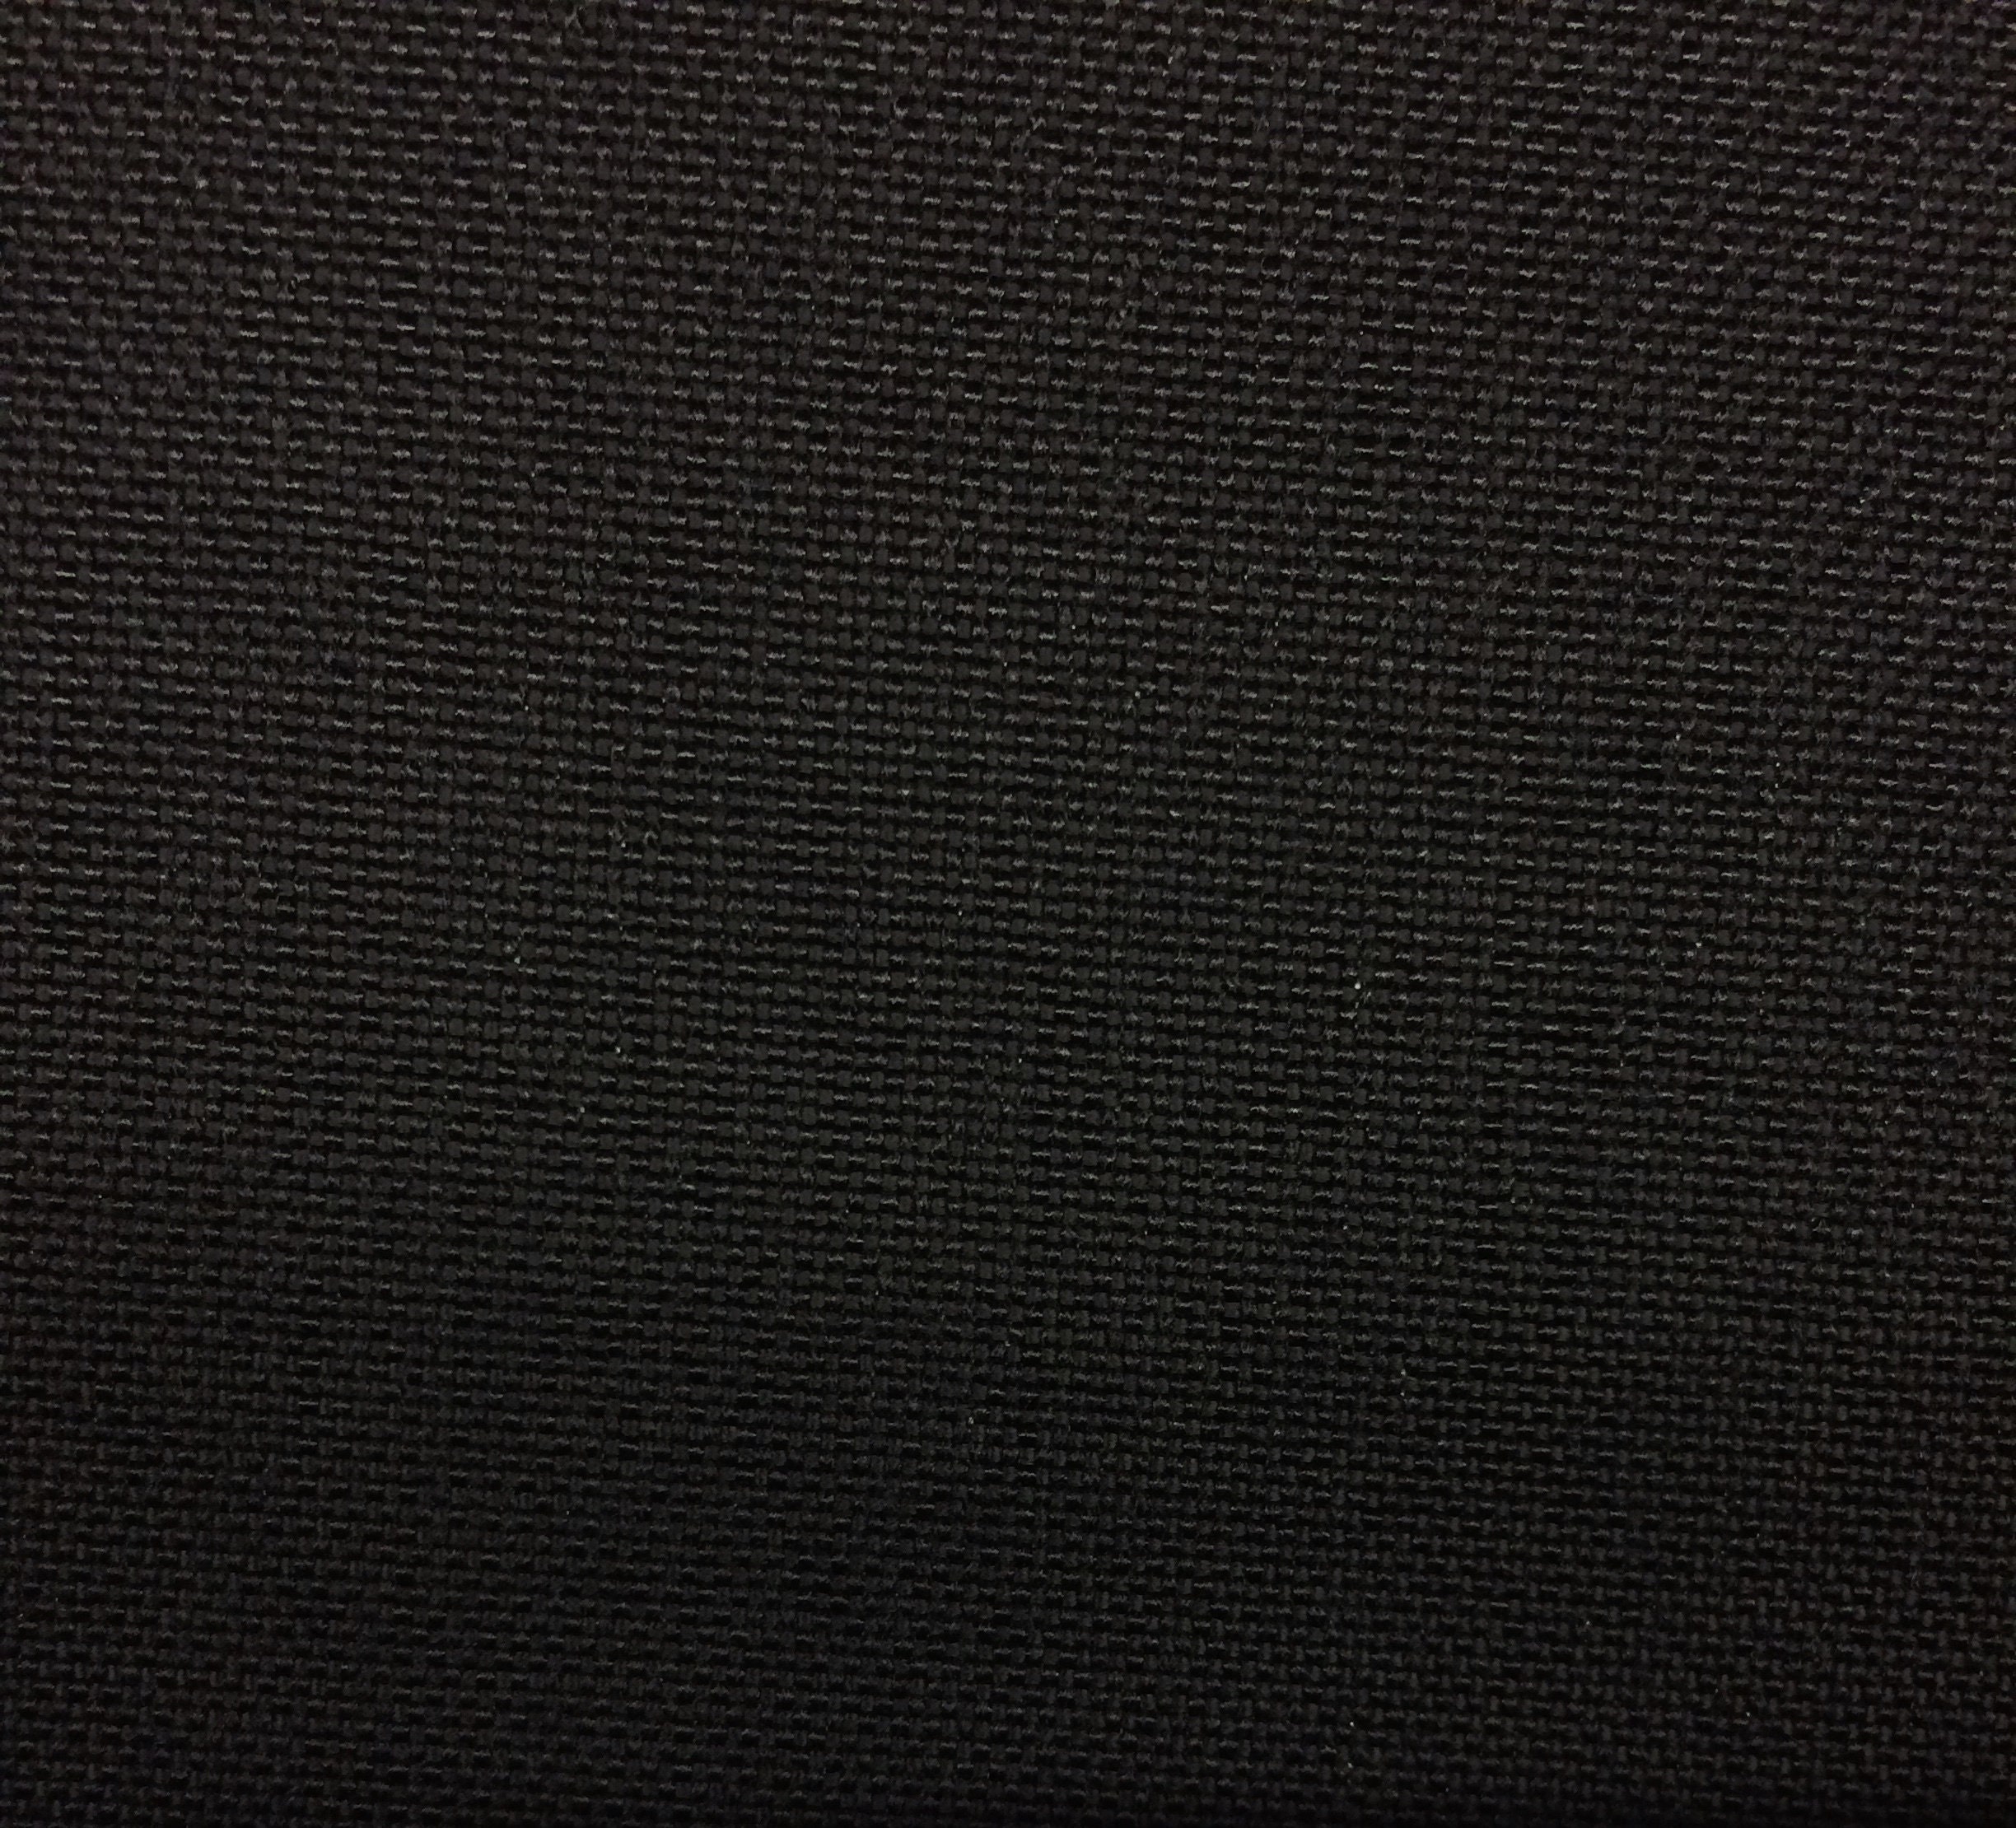 Midnight Blue 1,000 Denier Textured Nylon Fabric